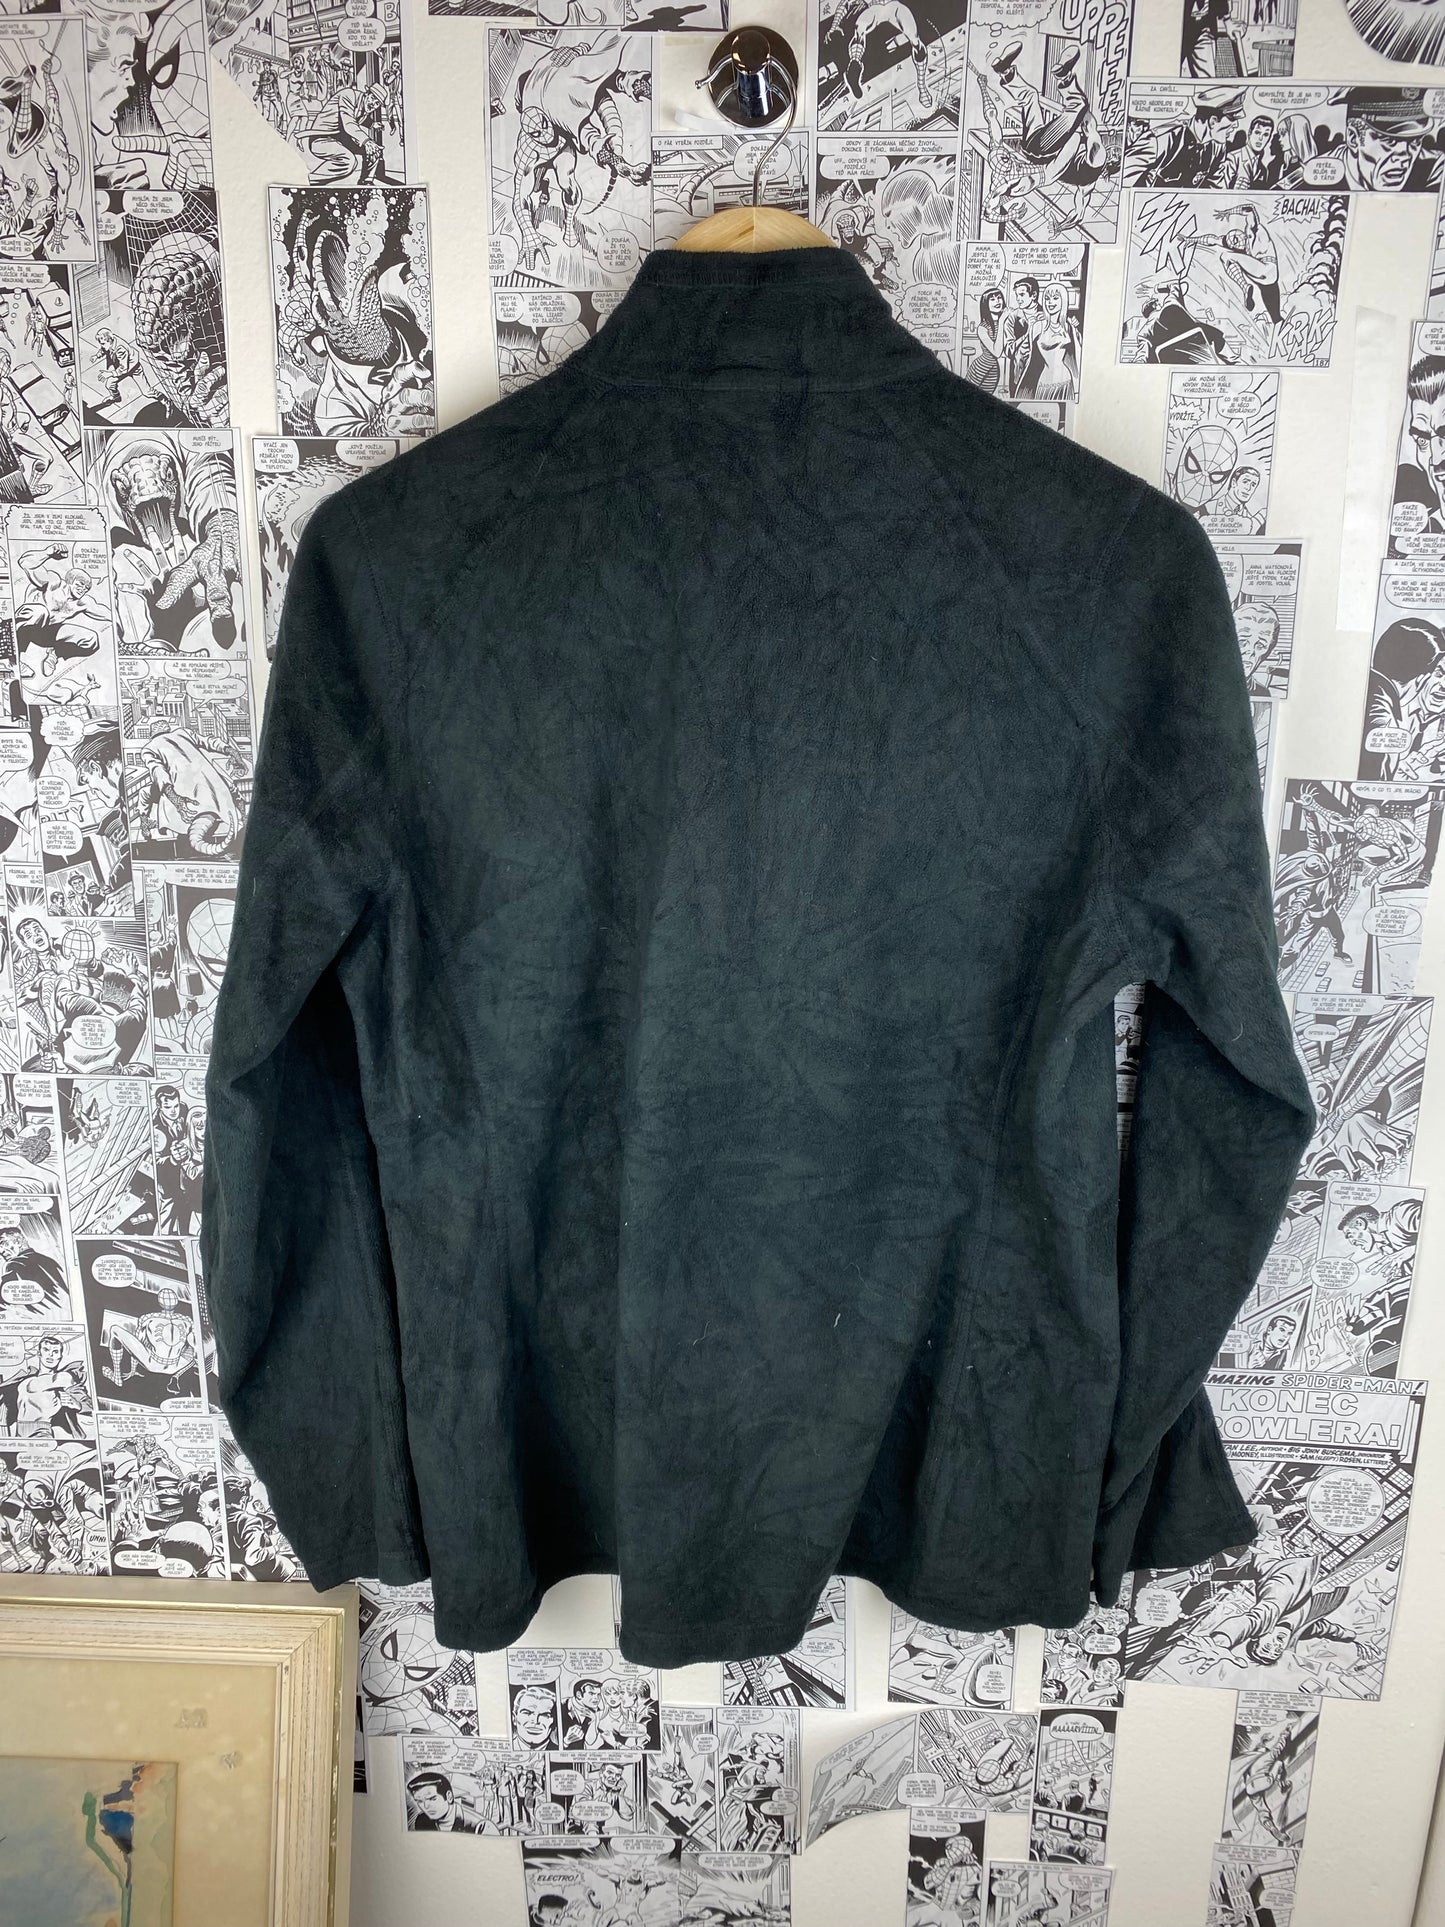 The North Face - Fleece Sweatshirt - size M